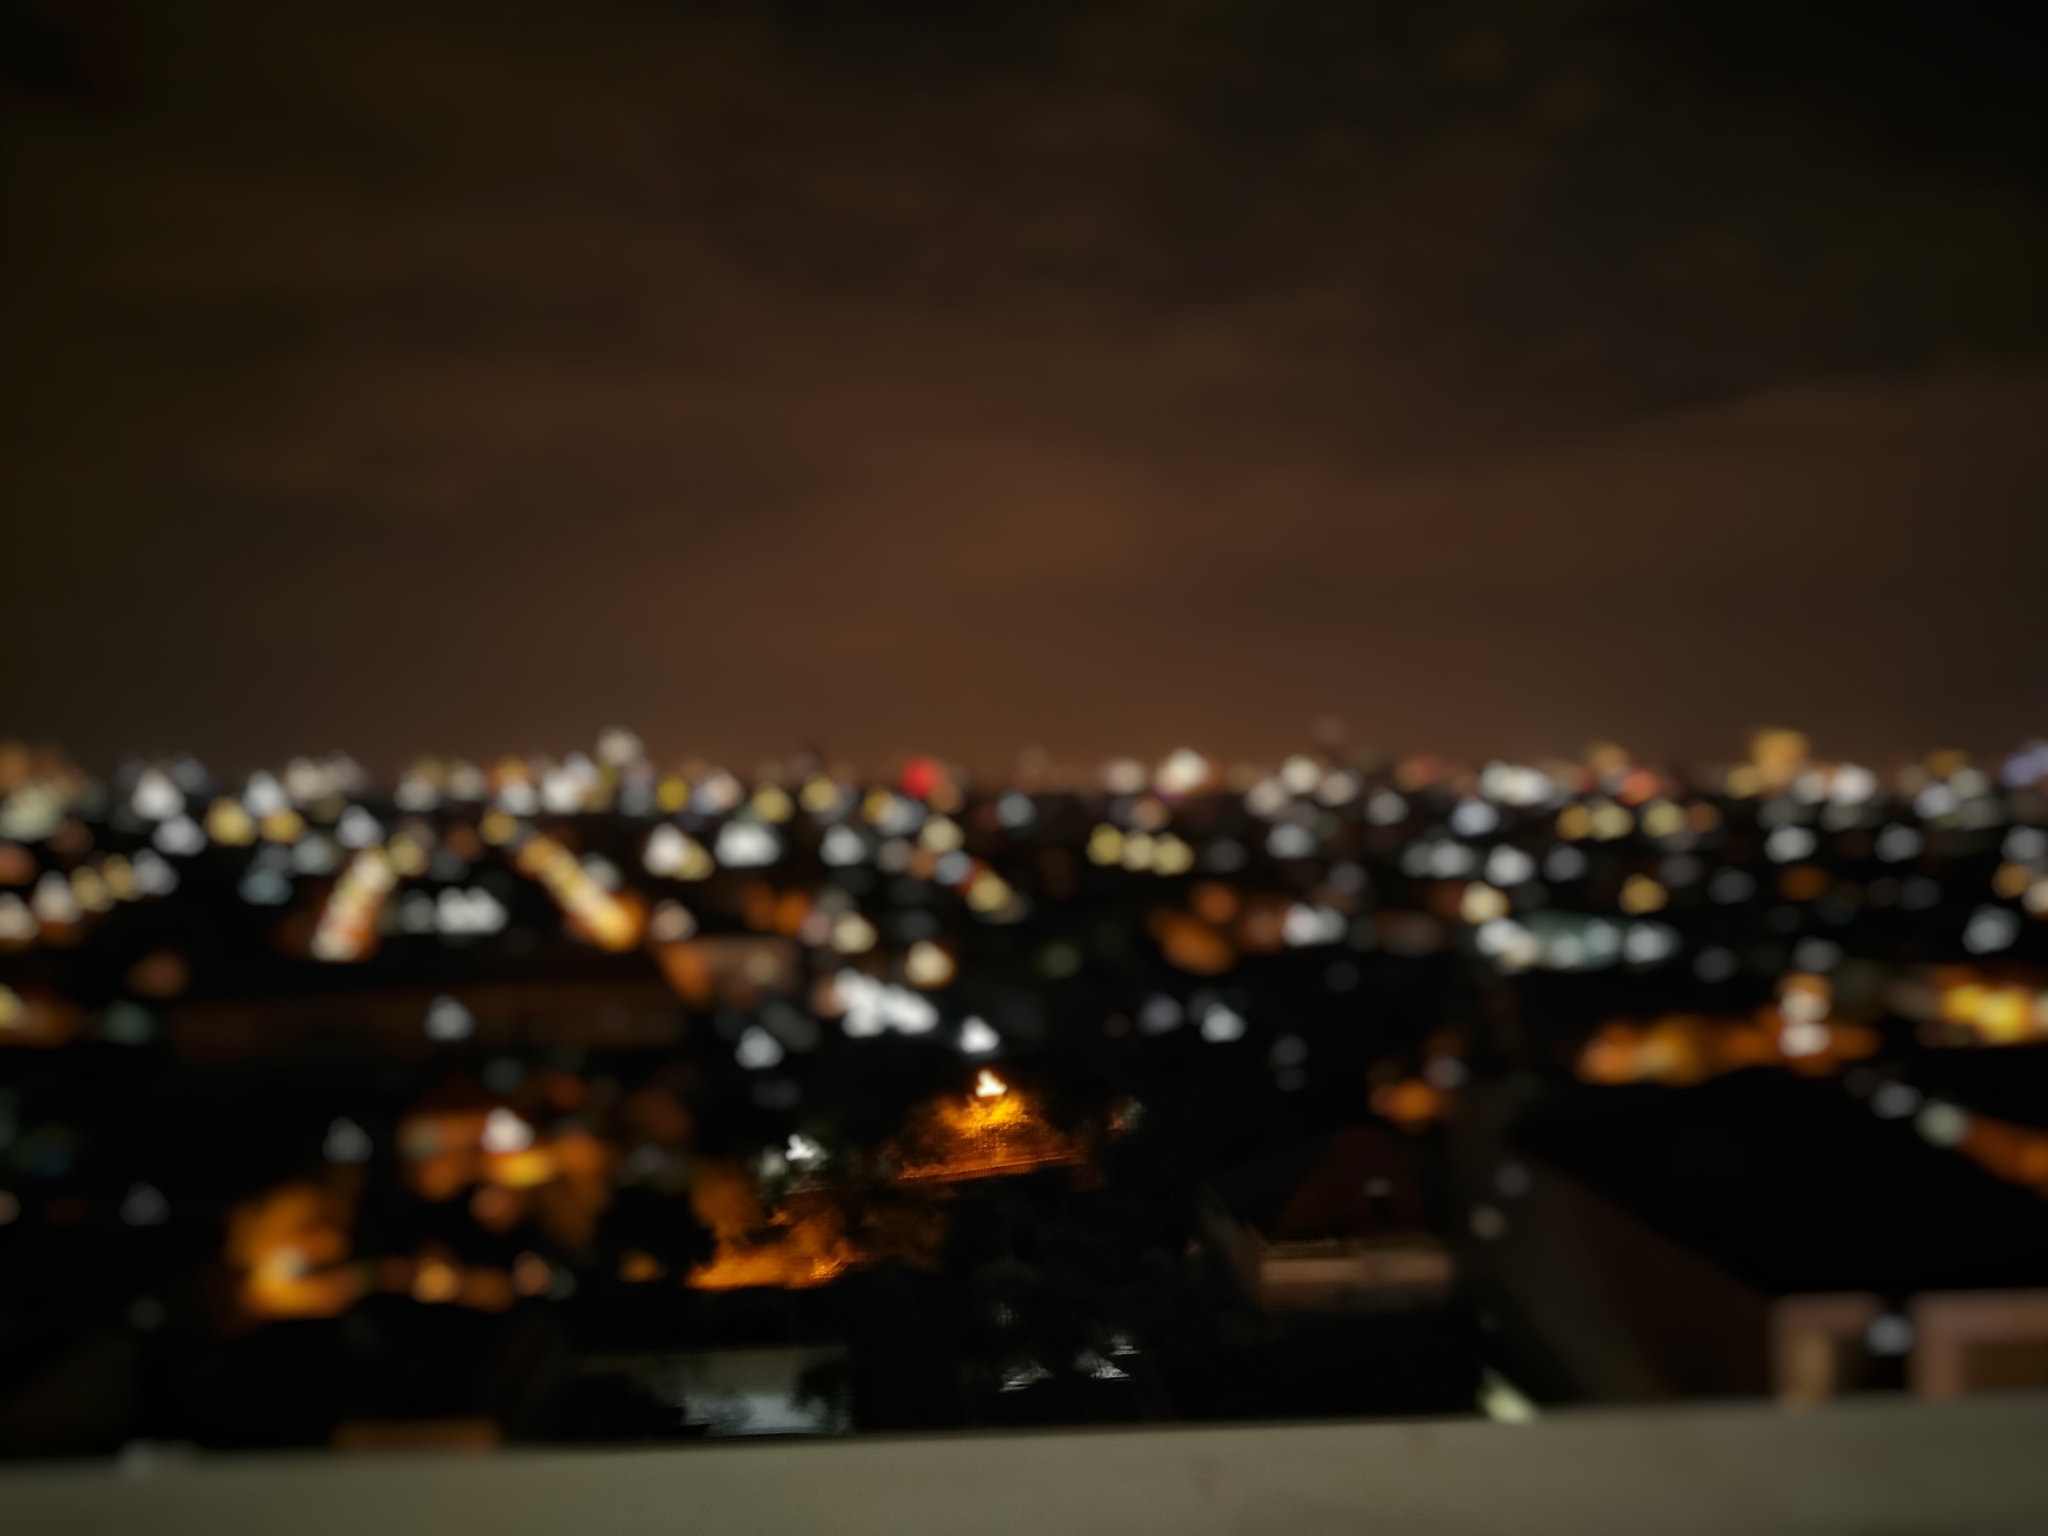 vivo 1611 sample photo. City blur photography